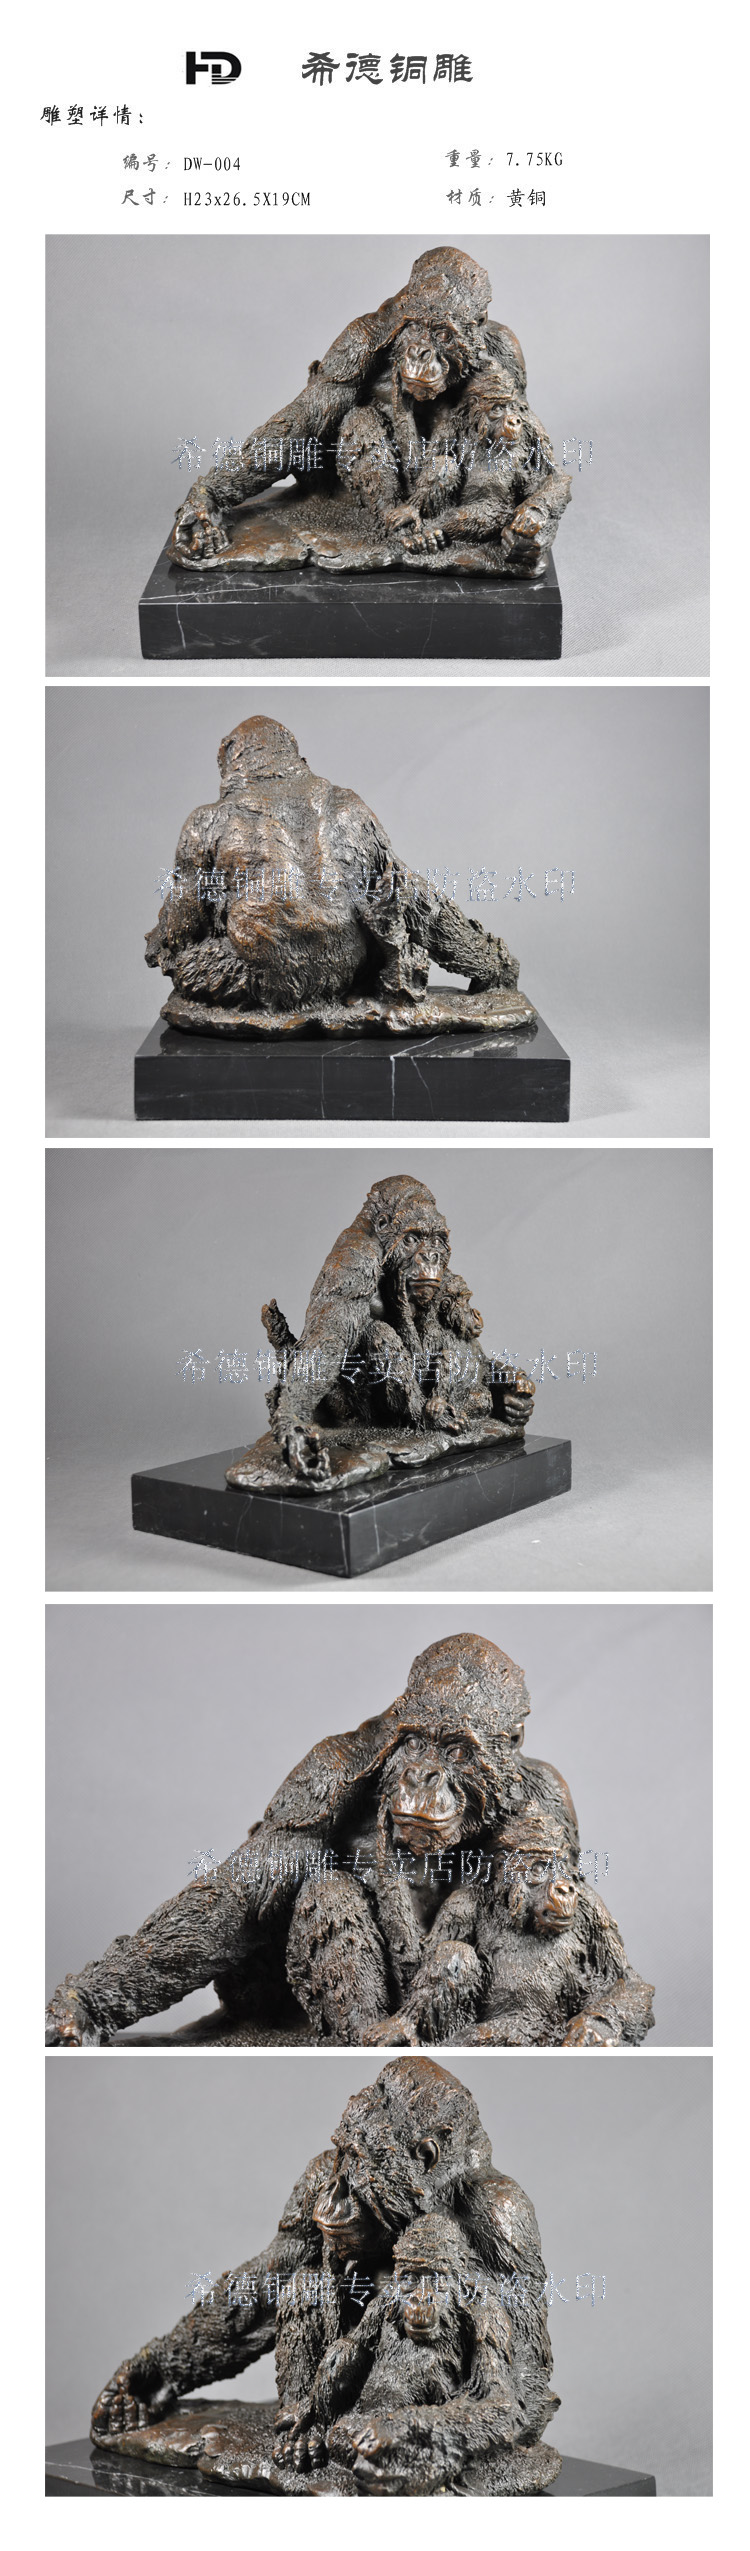 Bronze sculpture, copper animal sculpture crafts soft mother and son orangutan crafts dw-004